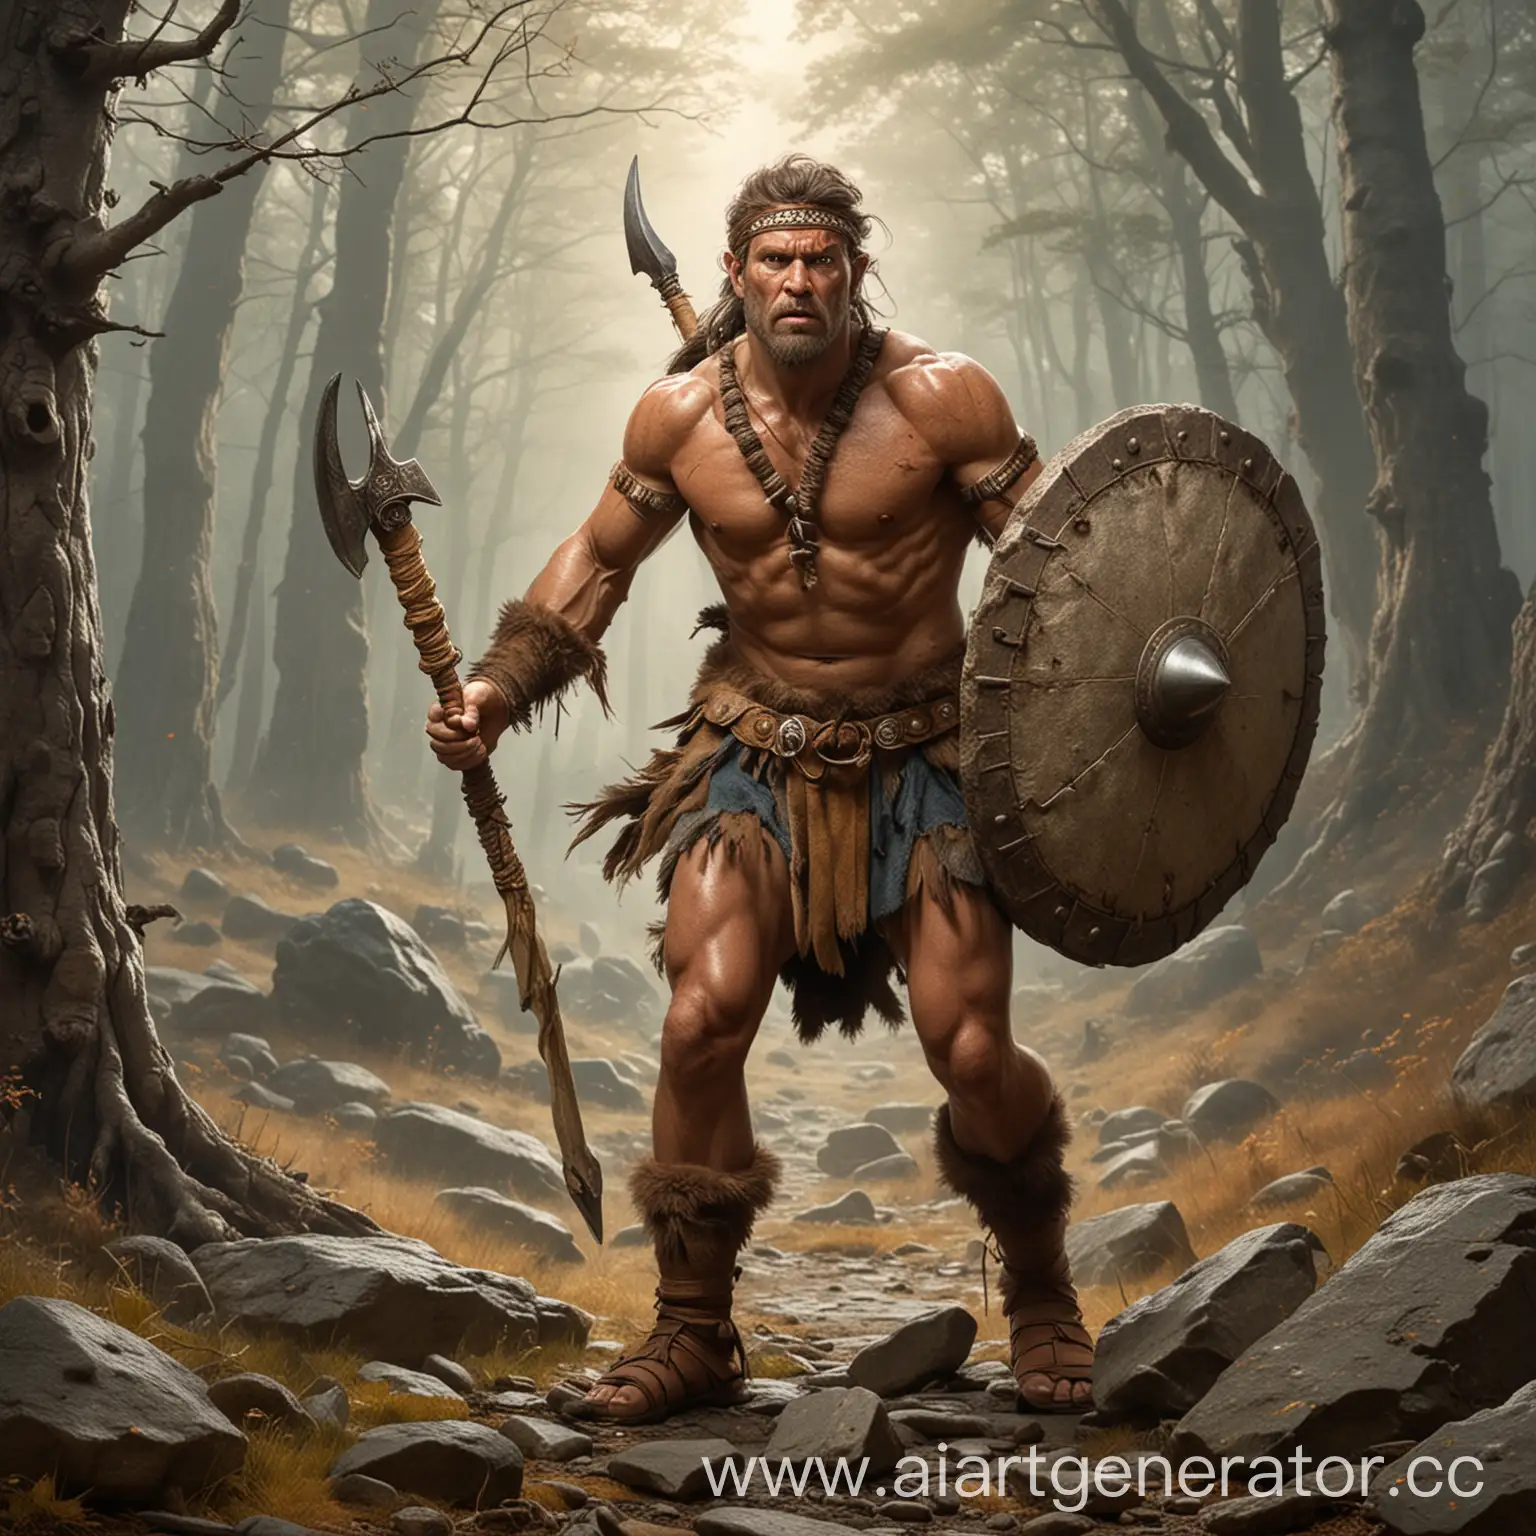 Ancient-Stone-Age-Warrior-Battling-Prehistoric-Creatures